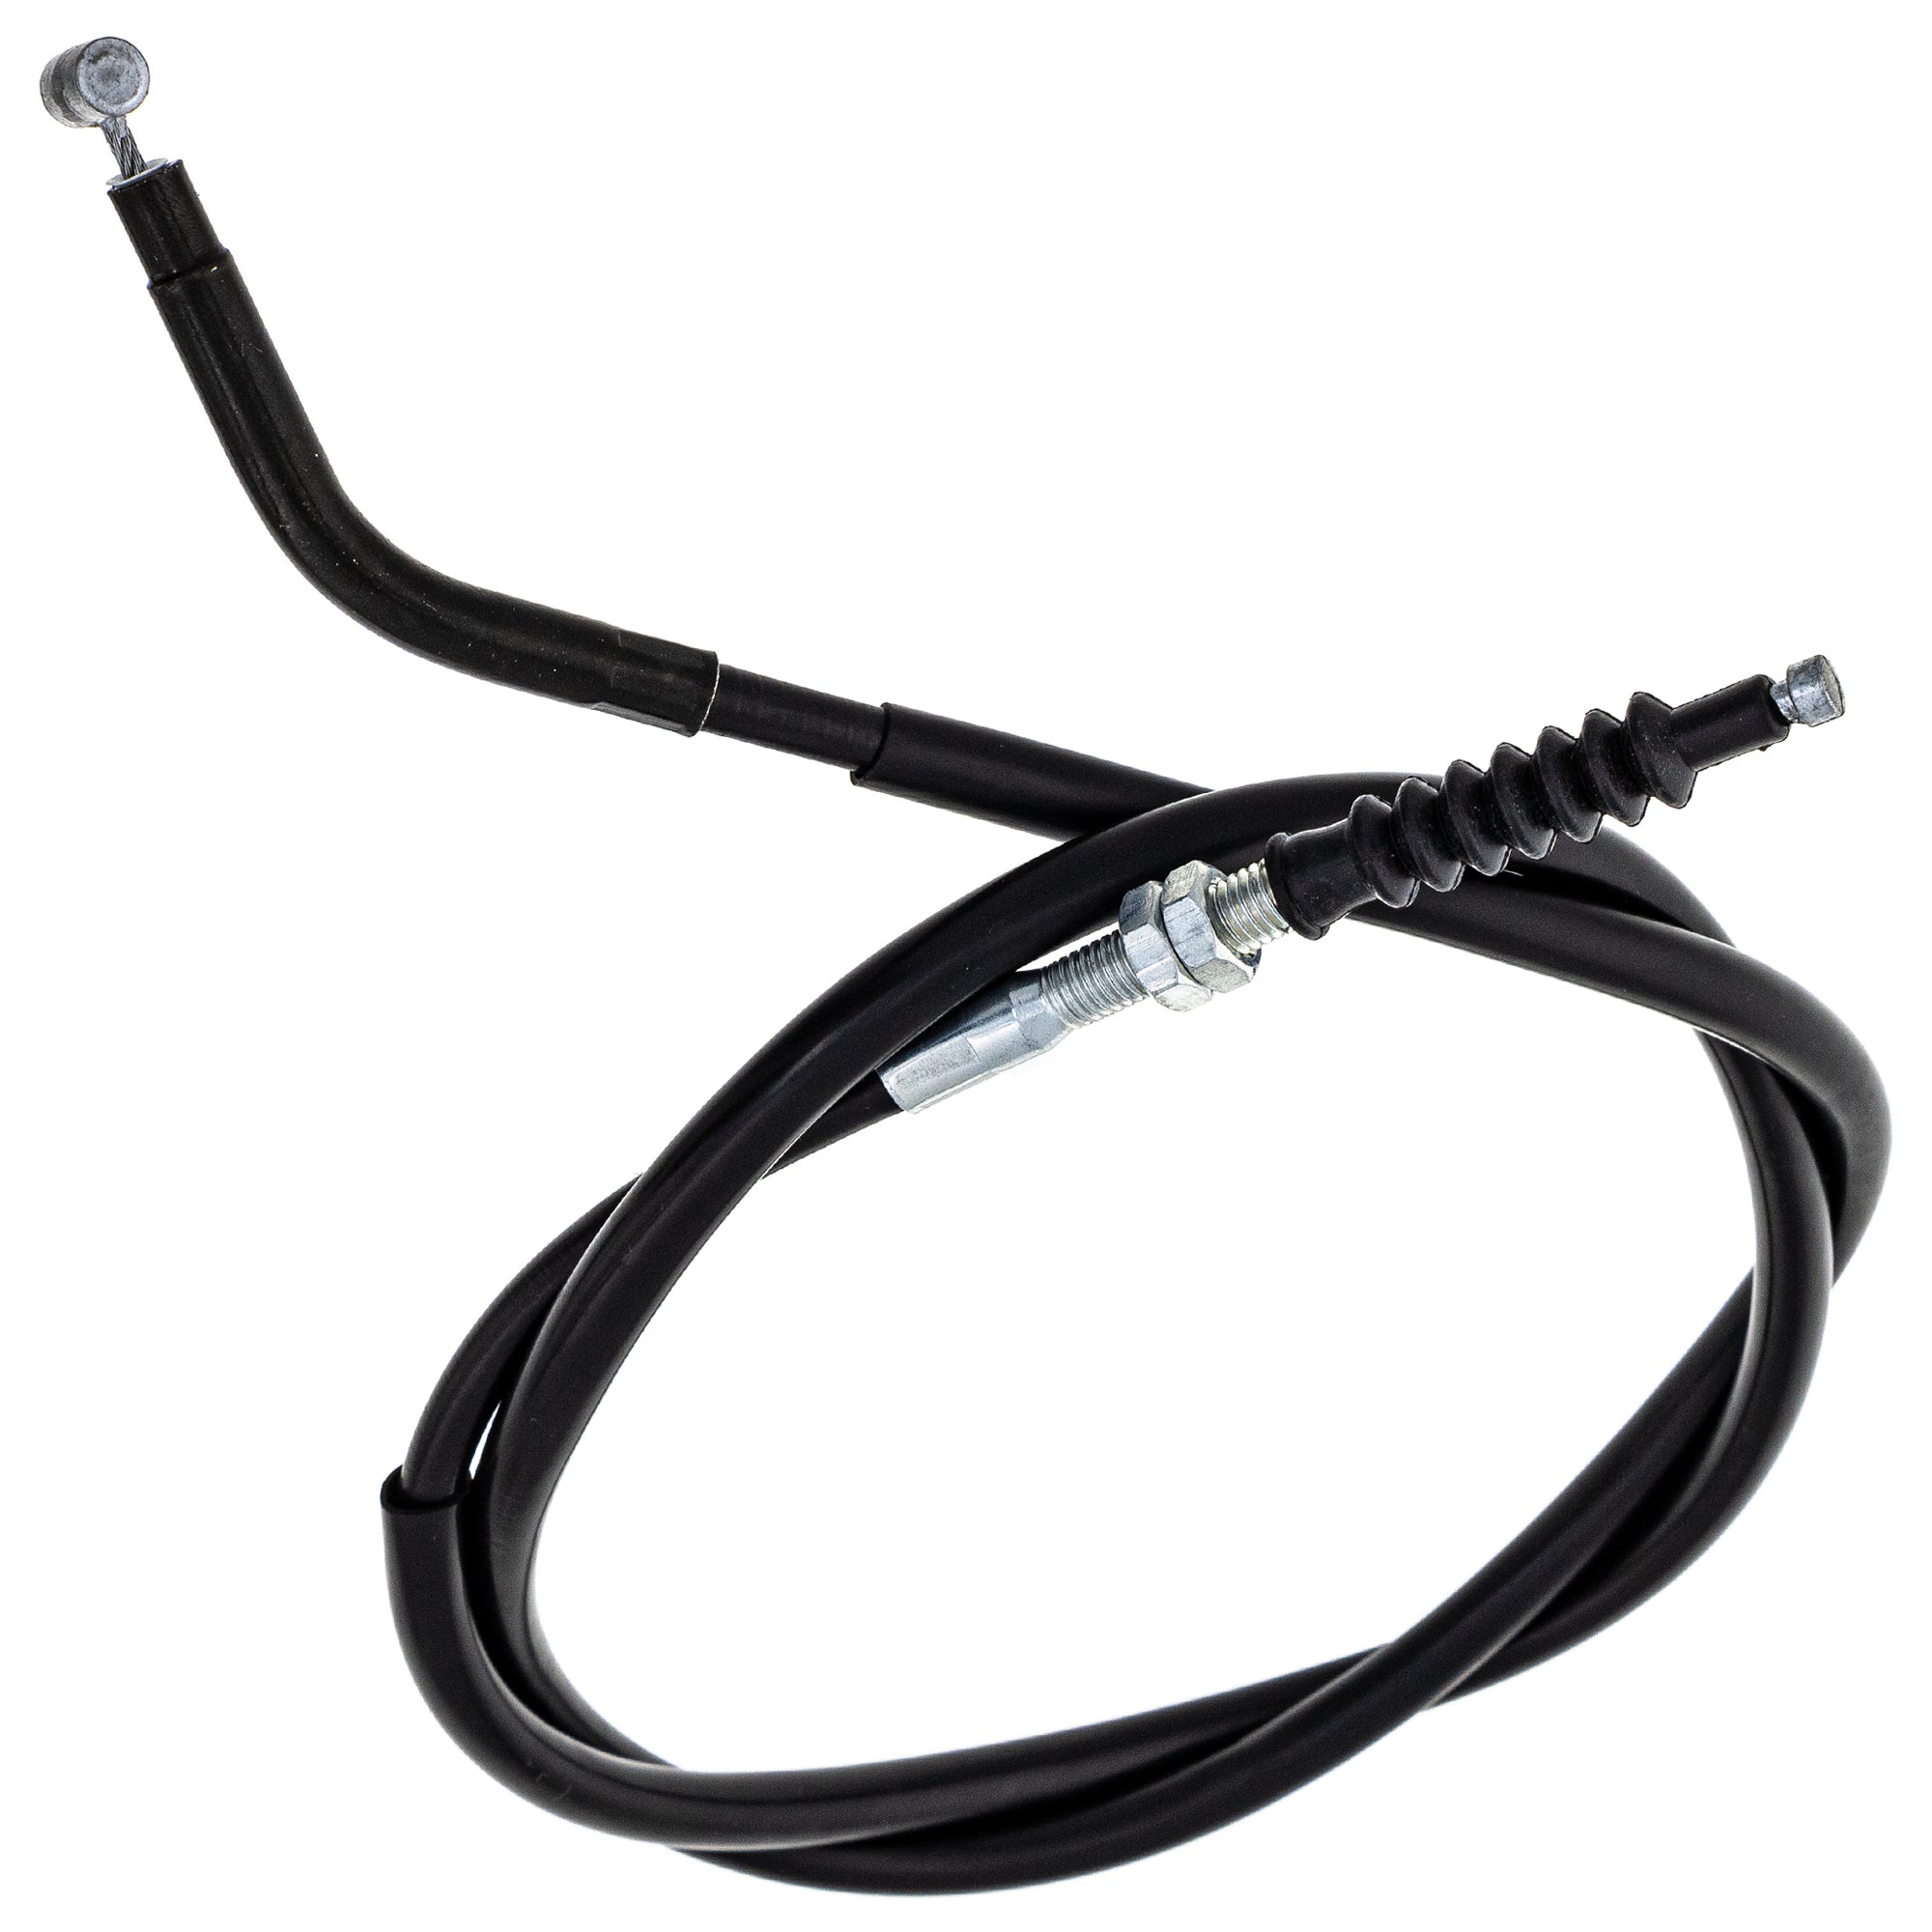 Clutch Cable for Kawasaki GPz550 ZX550 Ninja ZX6 54011-1207 54011-1301